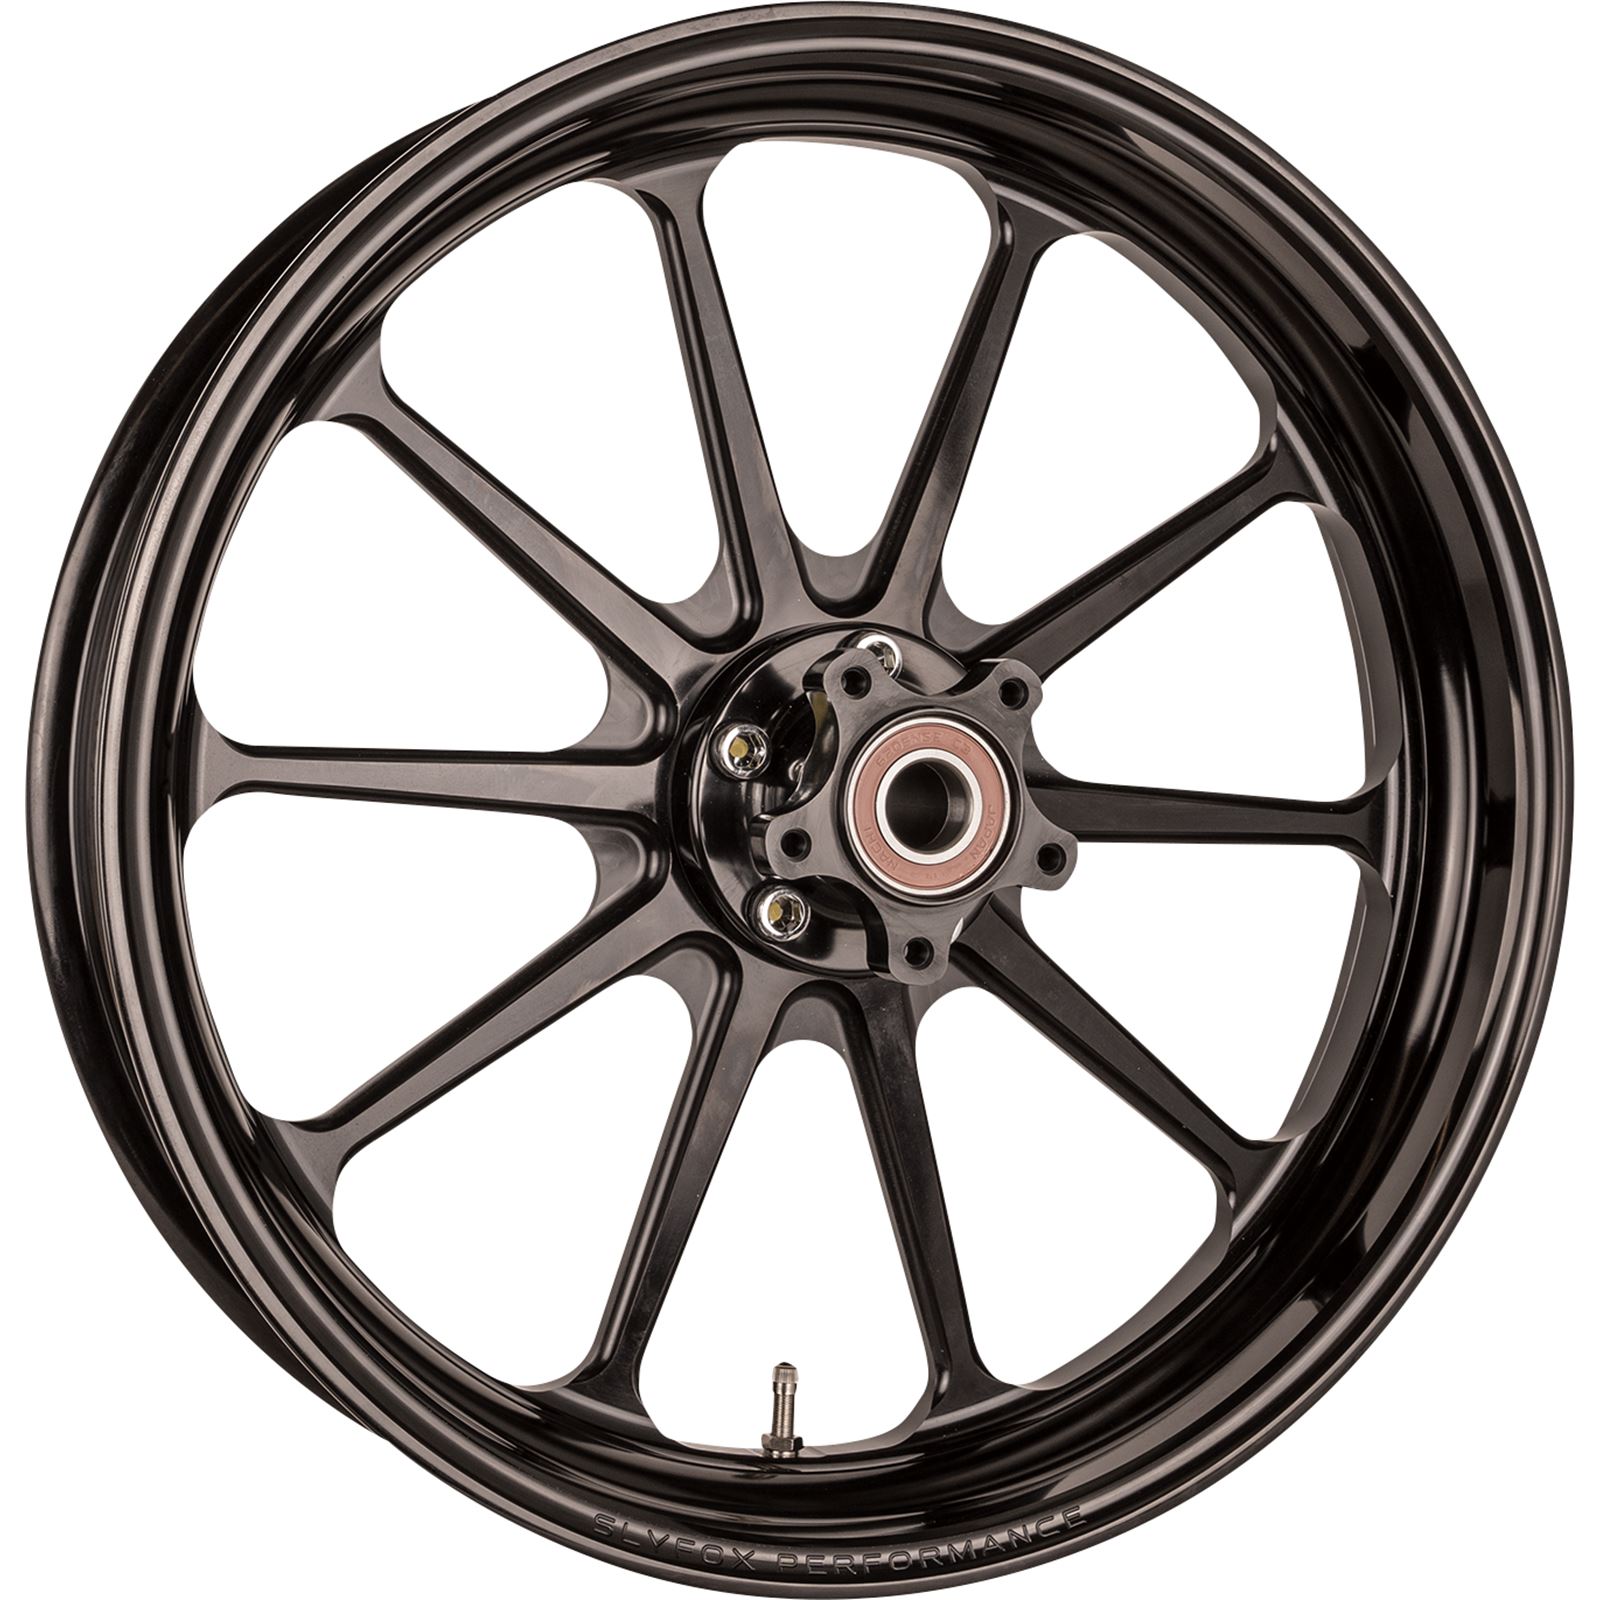 Slyfox Wheel - Track Pro - Front/Dual Disc - No ABS - Black - 17"x3.5"